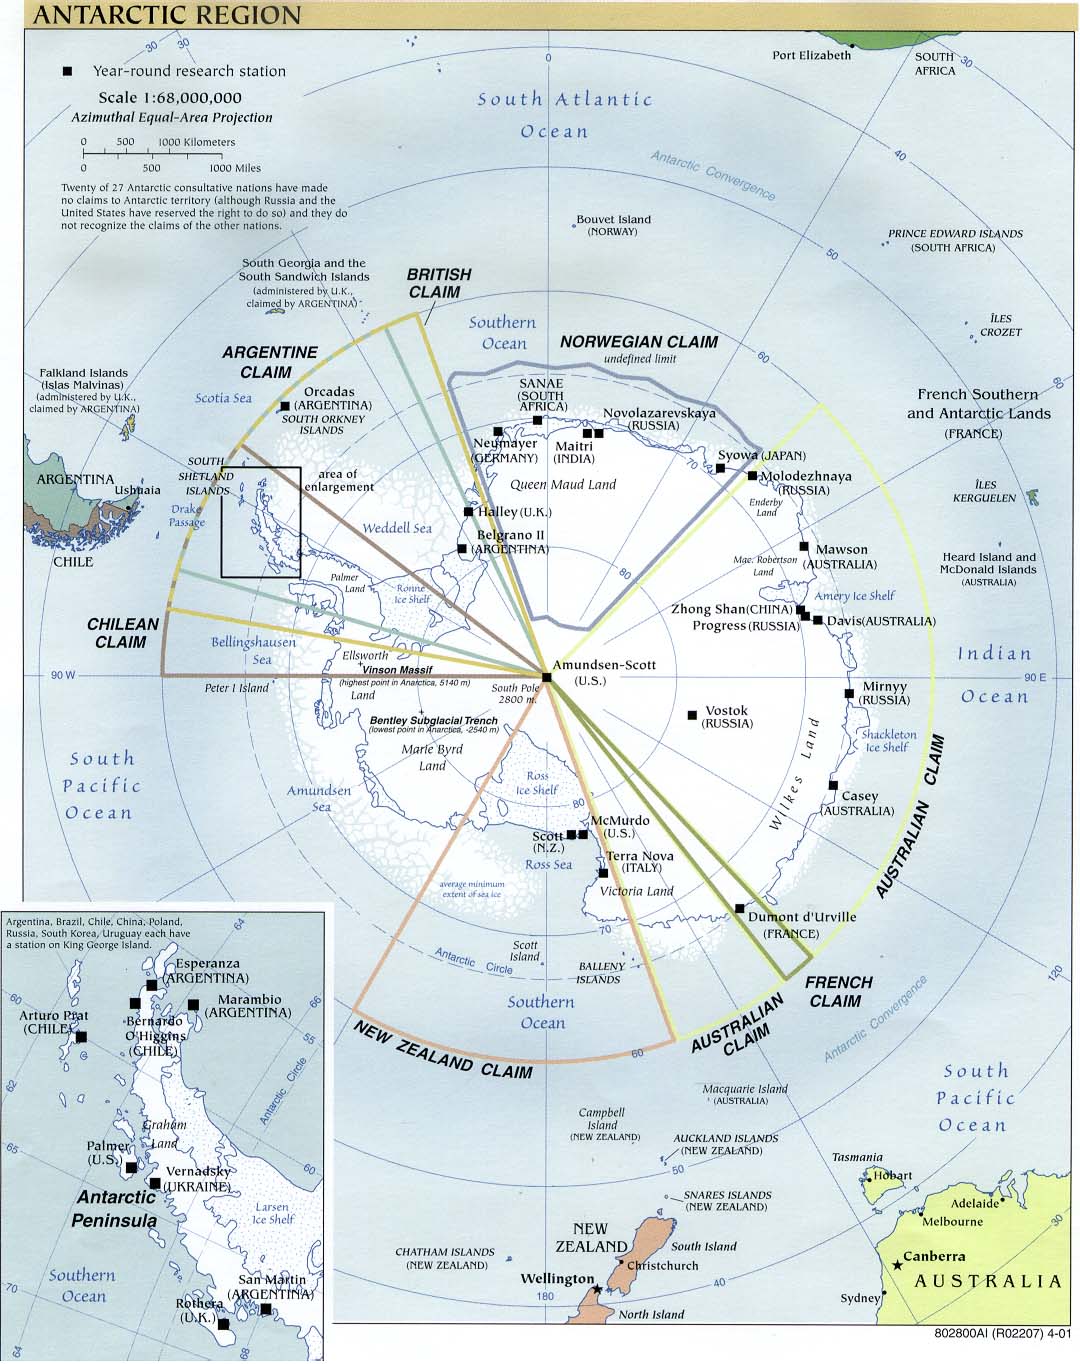 http://www.lib.utexas.edu/maps/islands_oceans_poles/antarctic_region_pol01.jpg